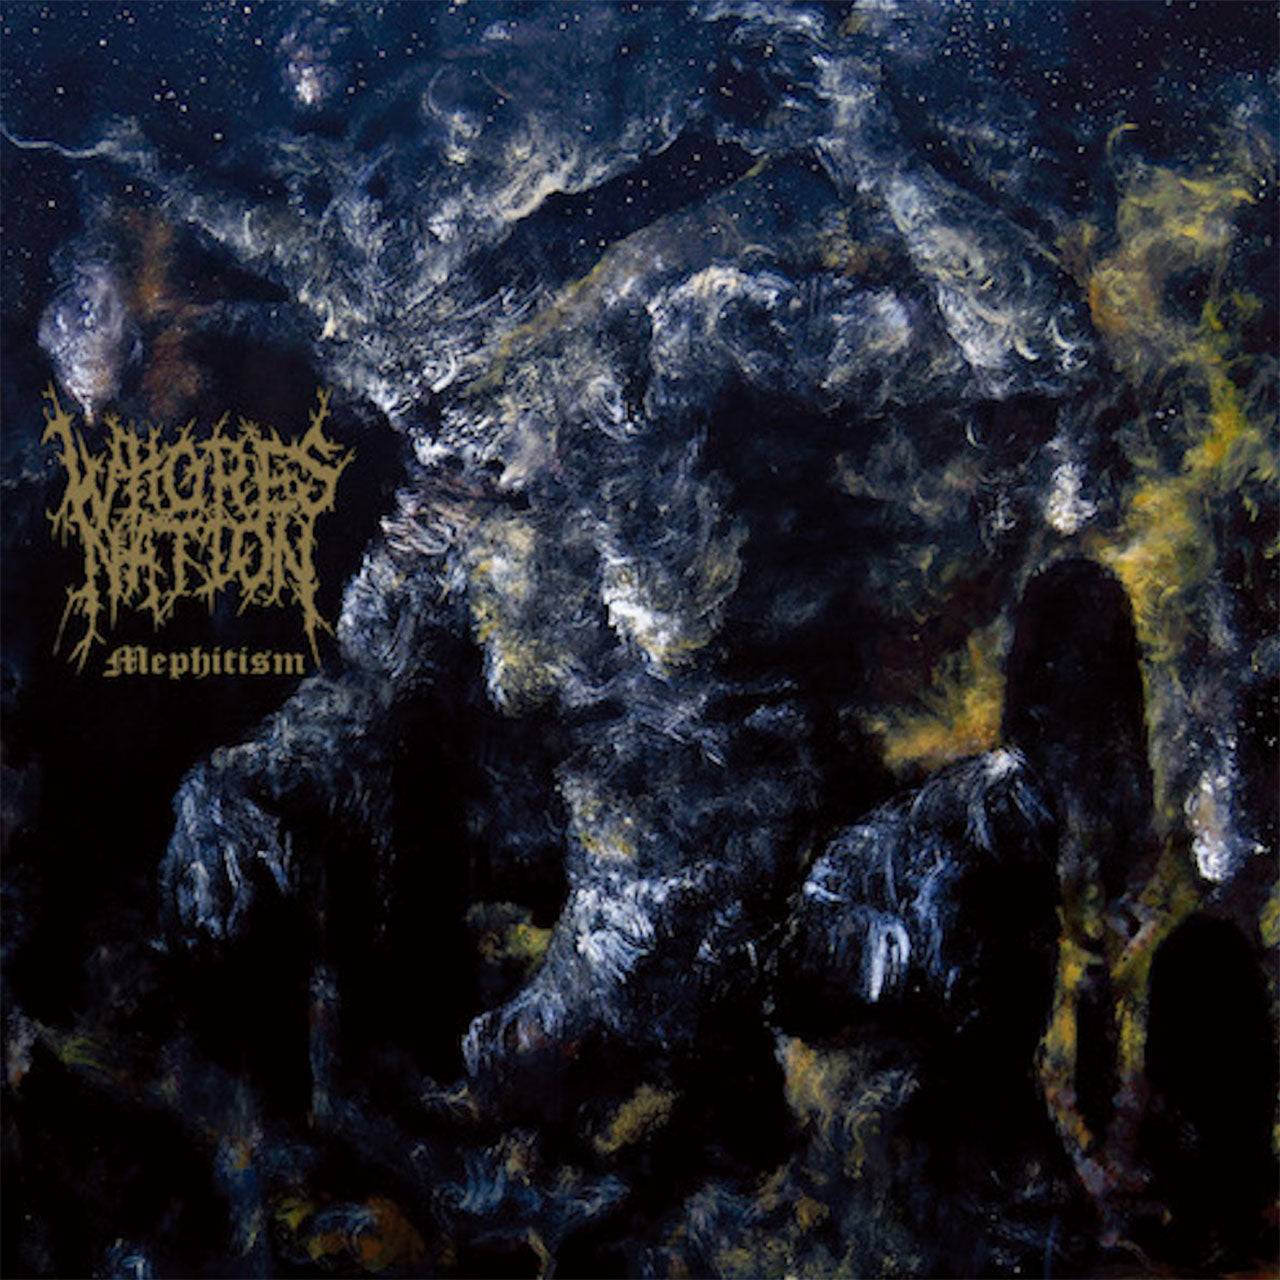 Whoresnation - Mephitism (CD)